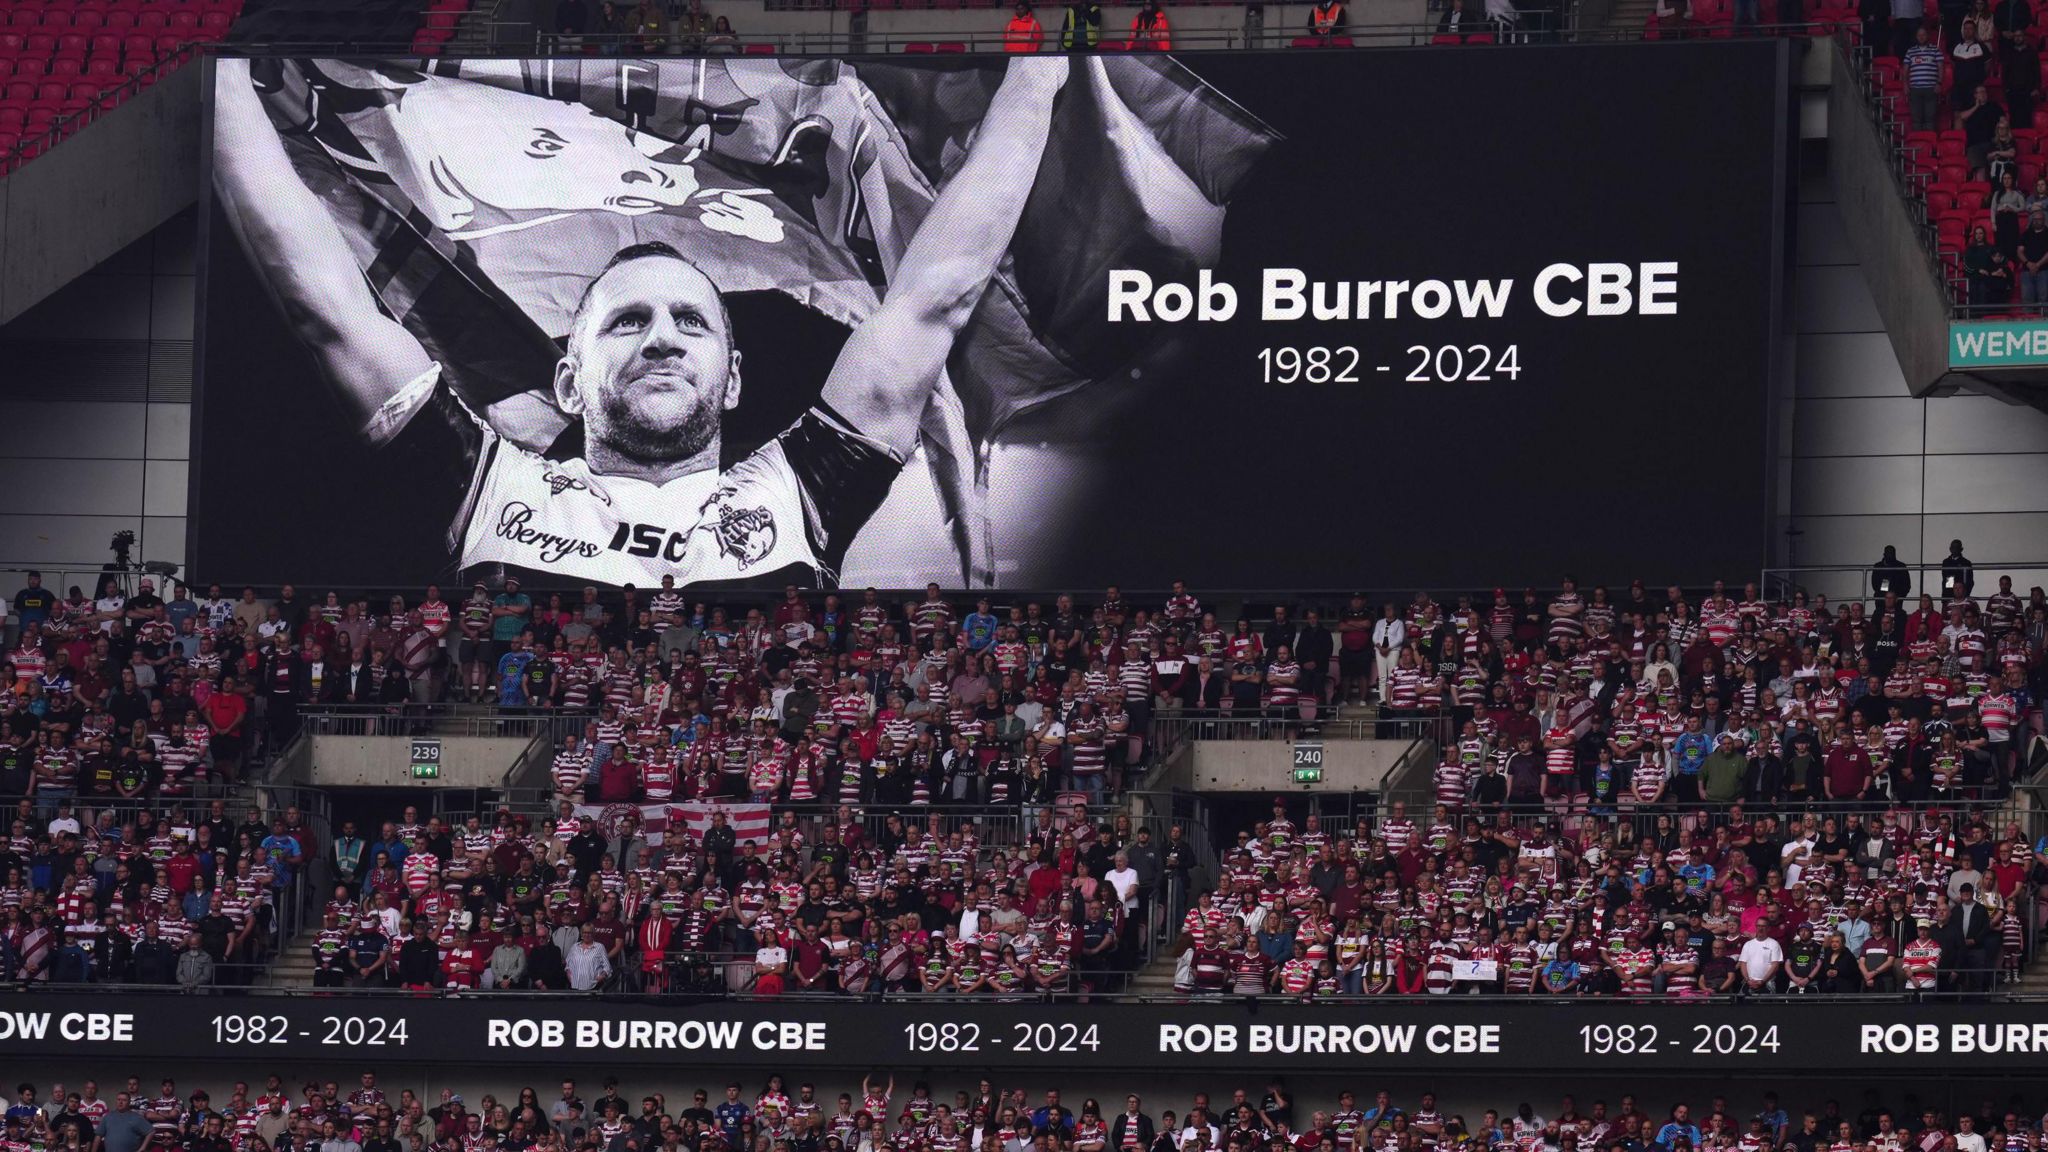 Rob Burrow on the Wembley big screen